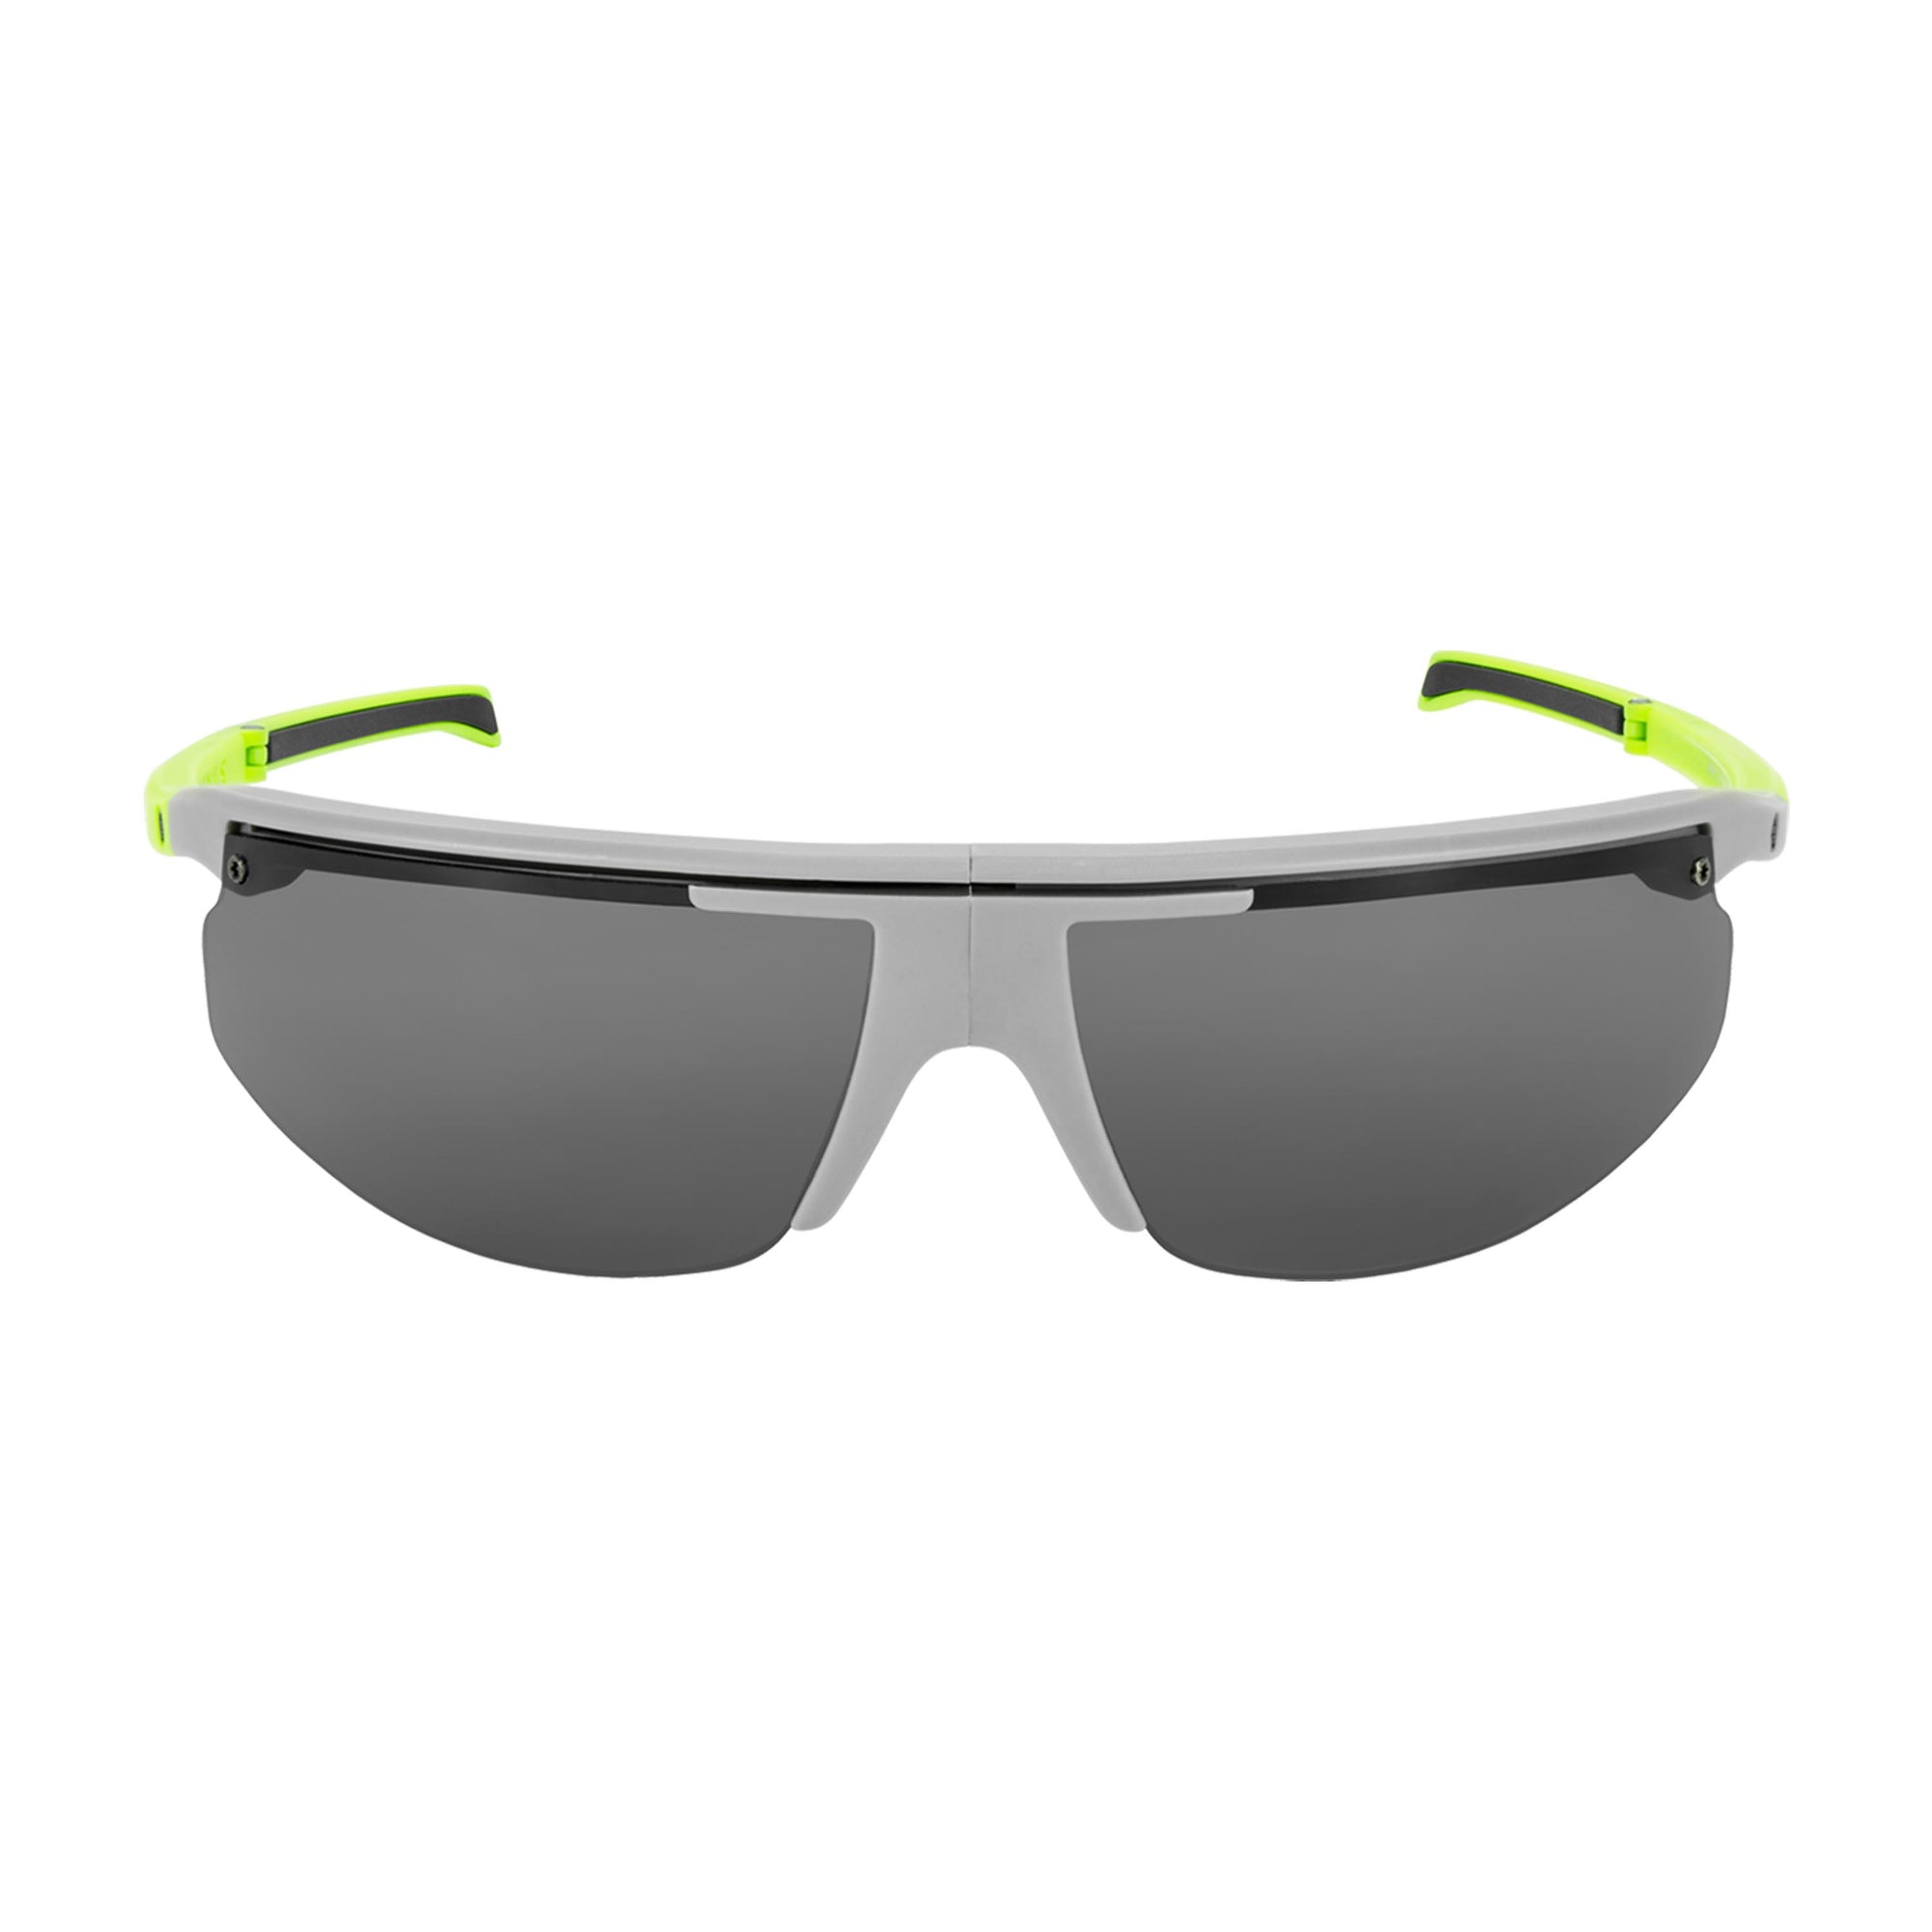 Popticals, Premium Compact Sunglasses, PopStar, 010040-EMGP, Polarized Sunglasses, Matte Gray/Green Frame, Gray Lenses, Front View